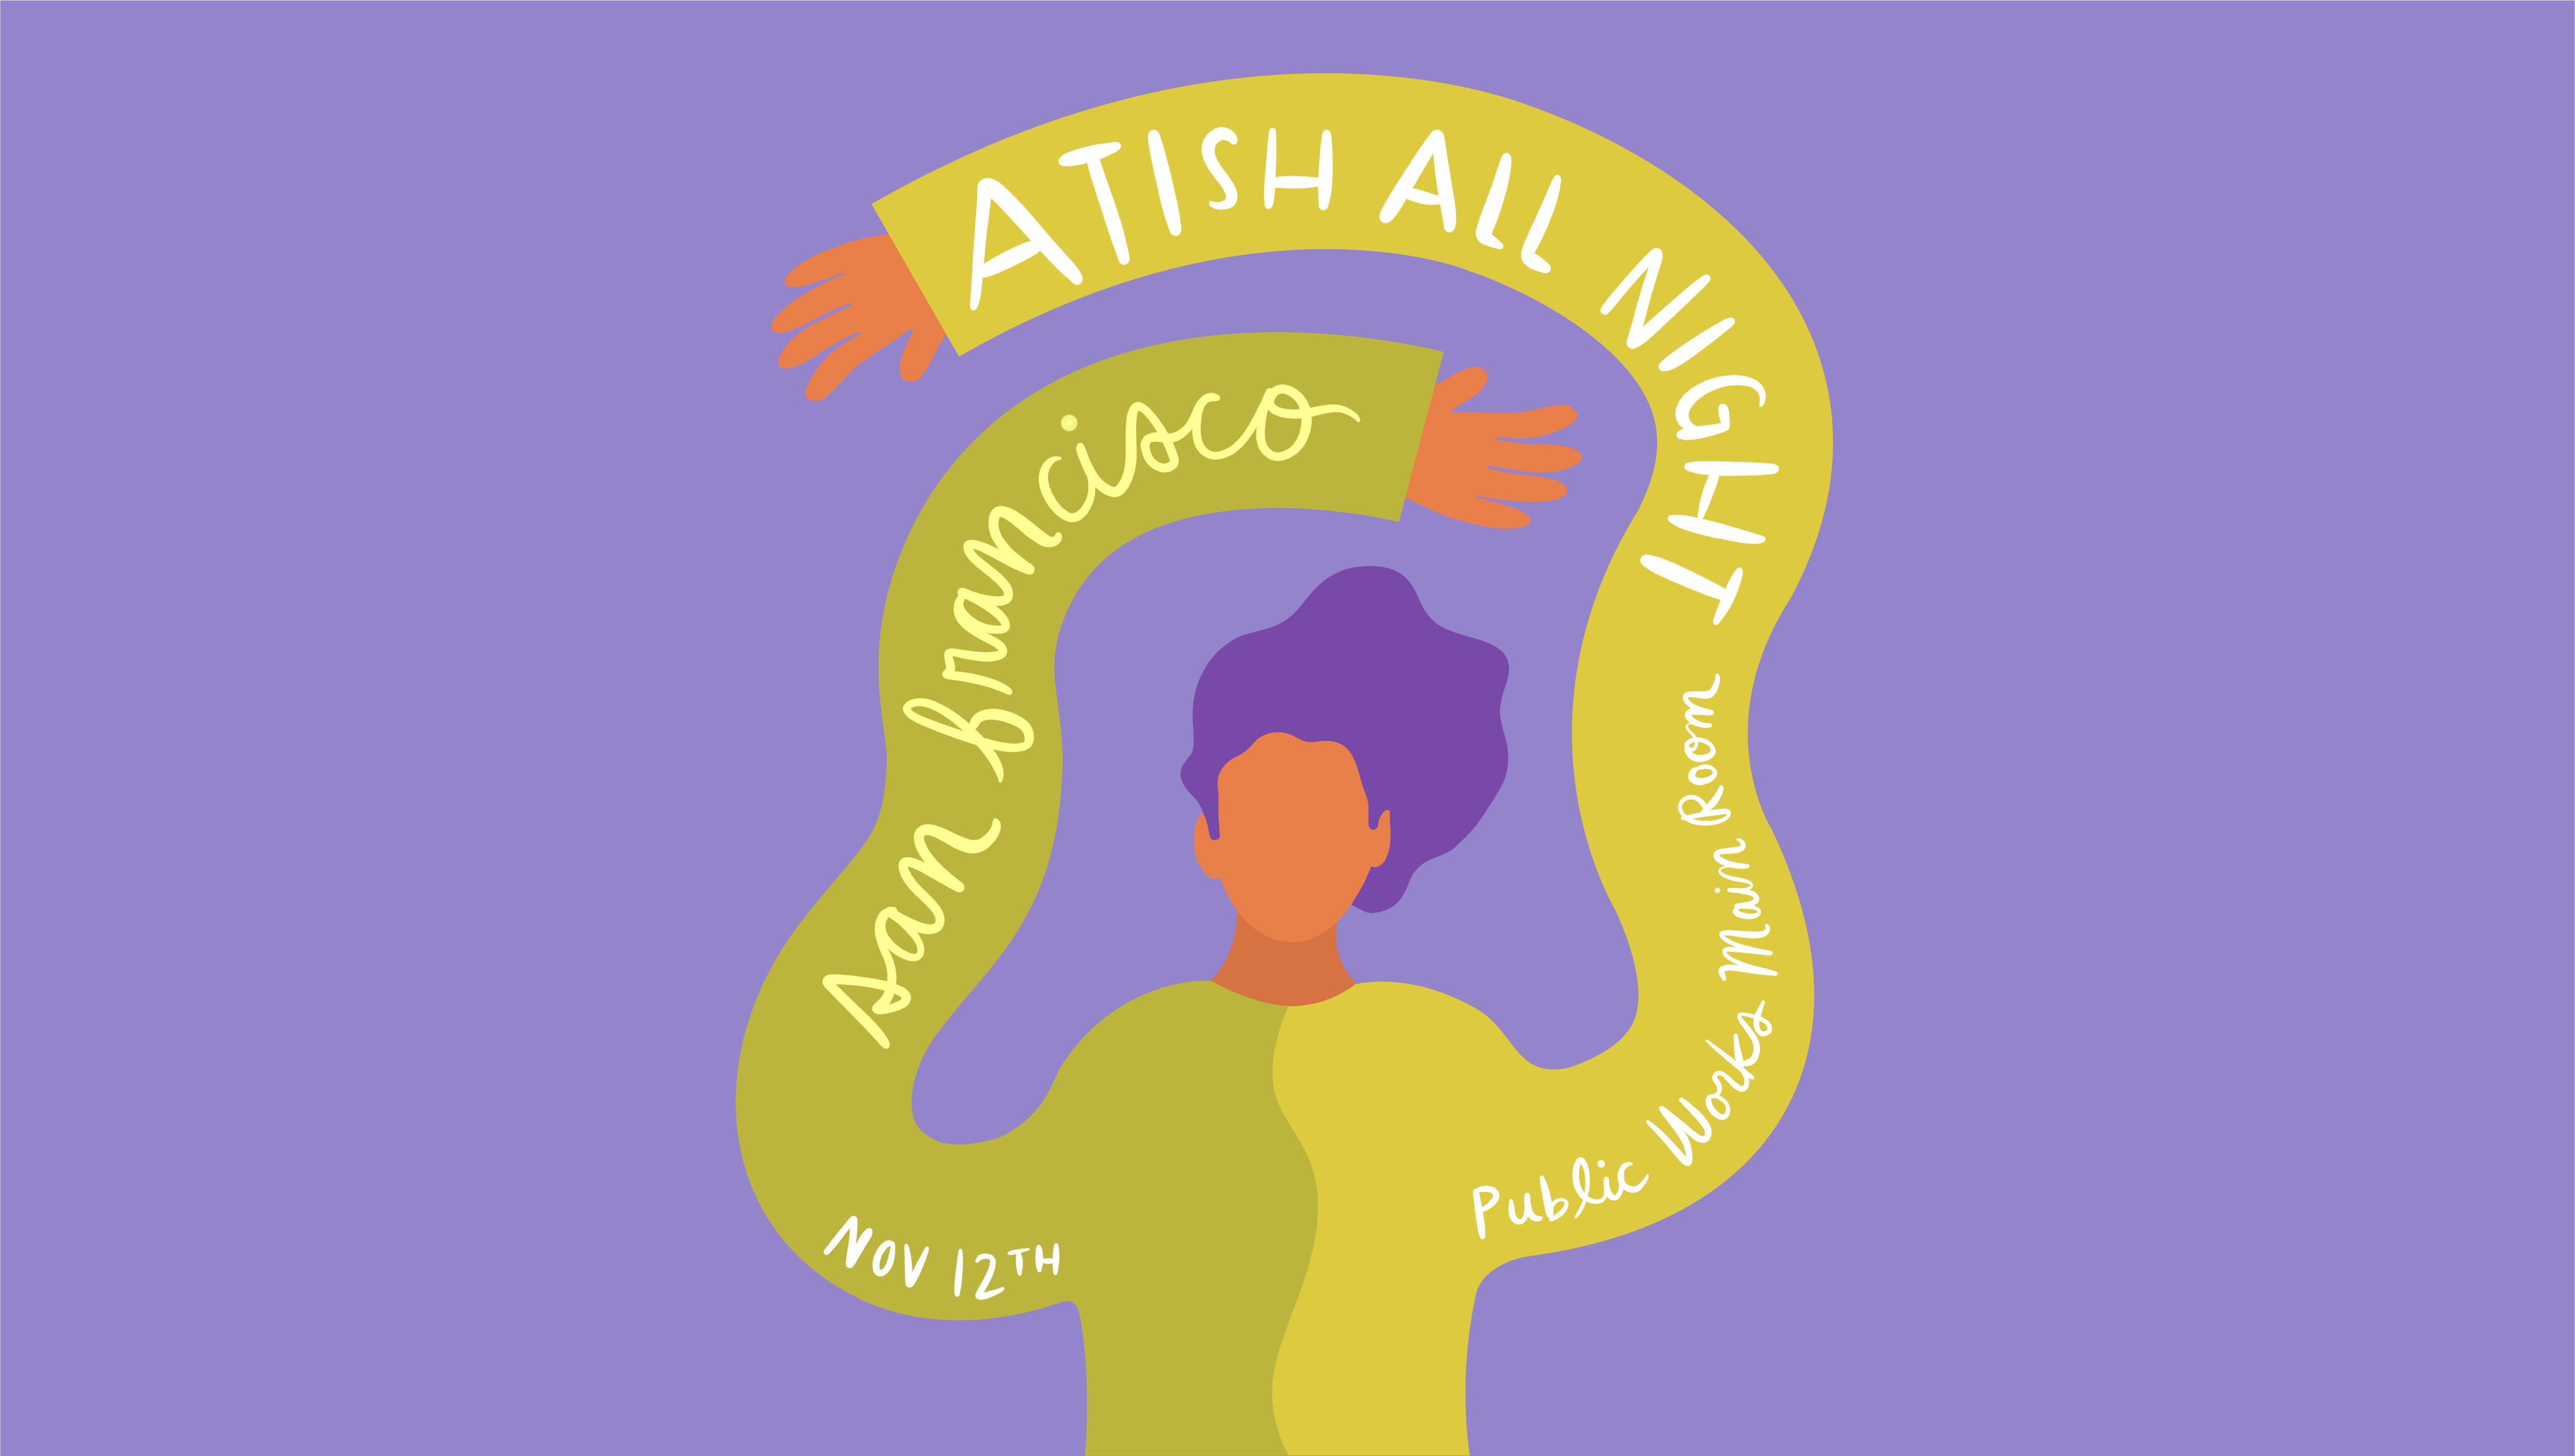 Atish All Night: San Francisco - Flyer front